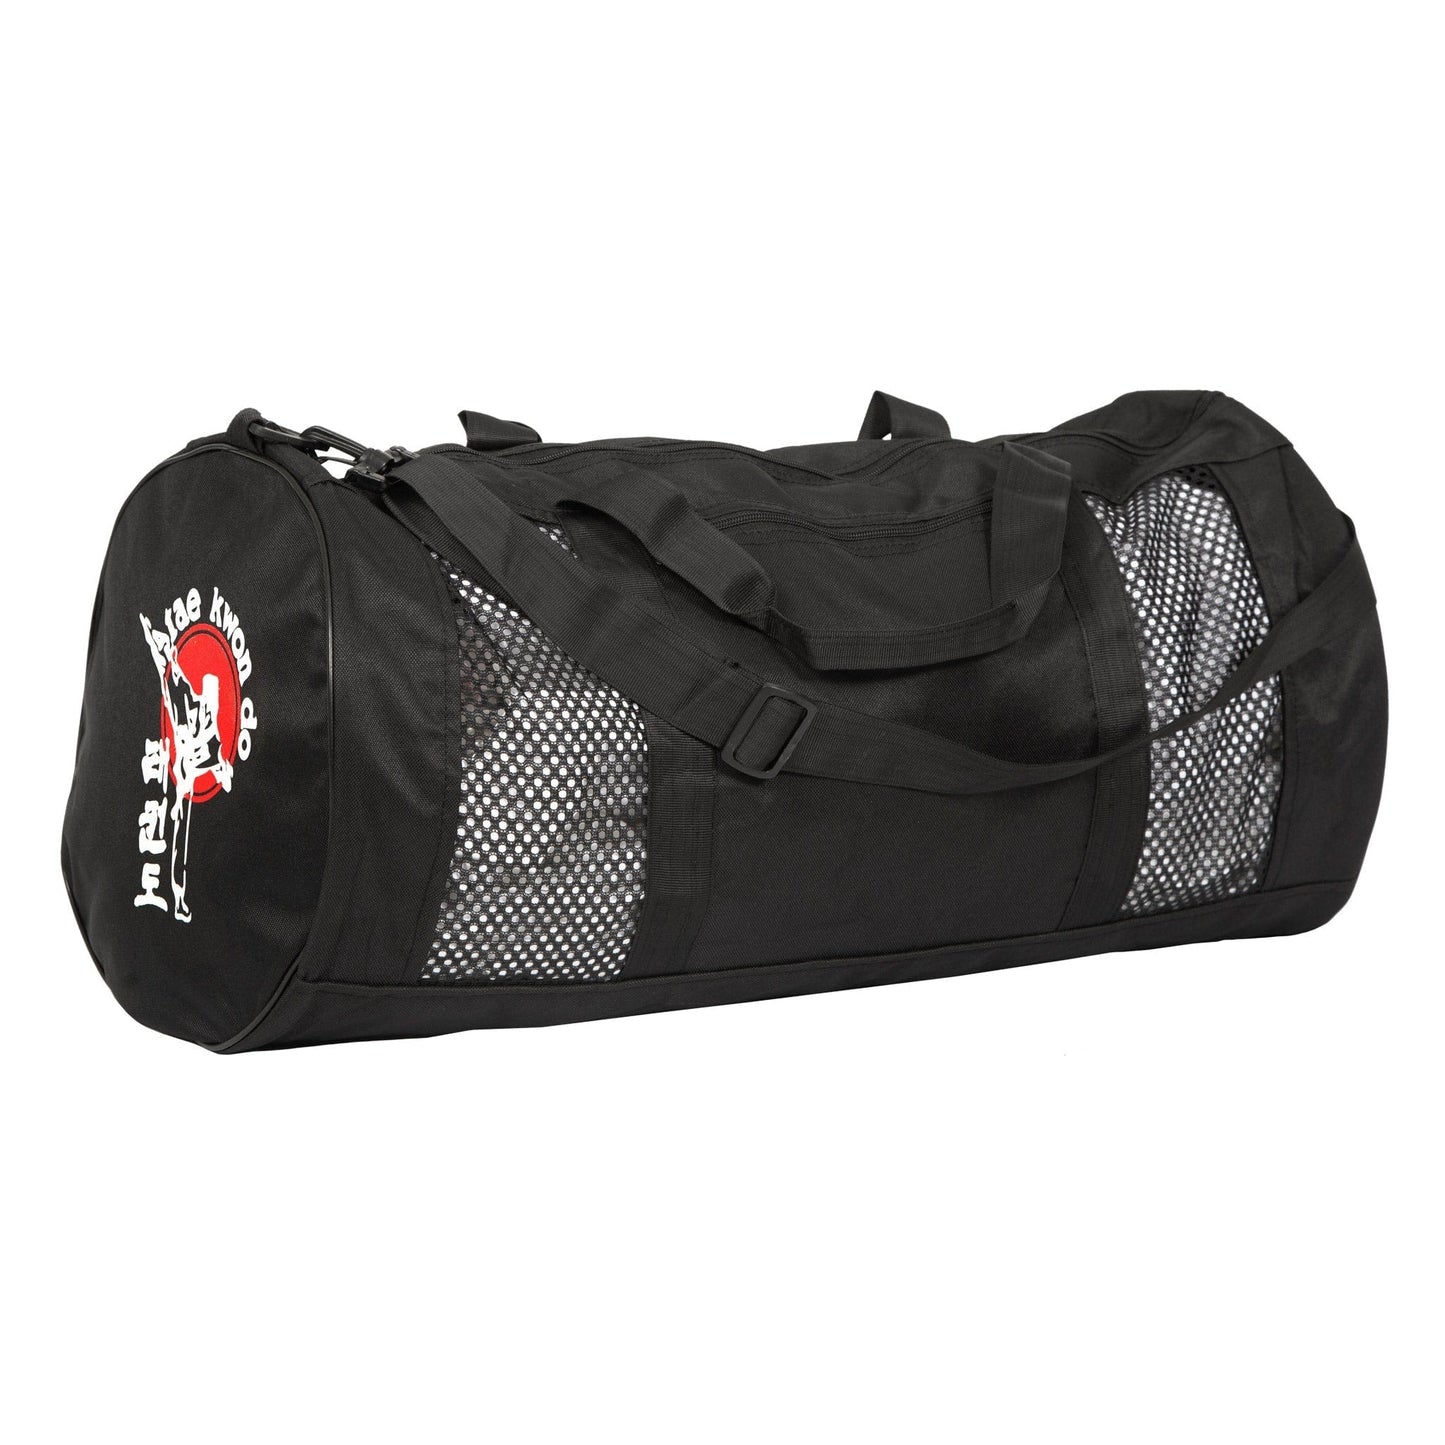 ProForce sporting goods ProForce Ultra Mesh Bag Martial arts gear bag